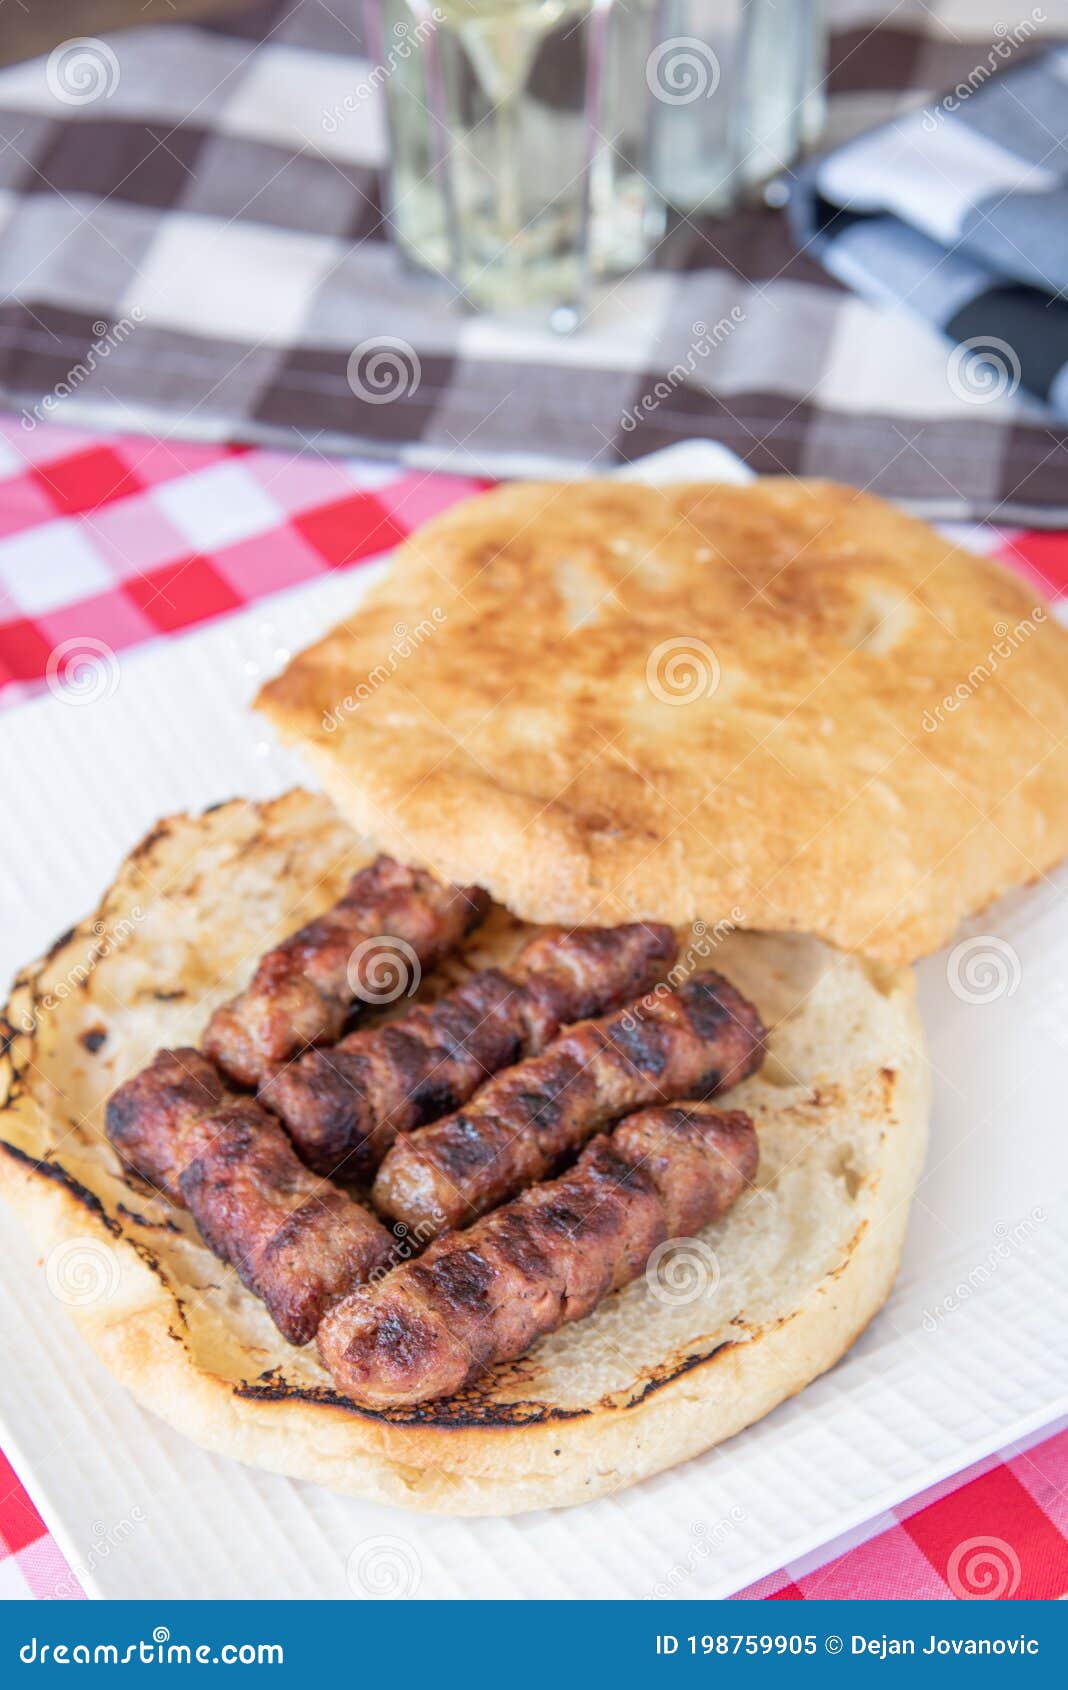 leskovacki cevapi u lepinji - grilled beef links served in home made bun